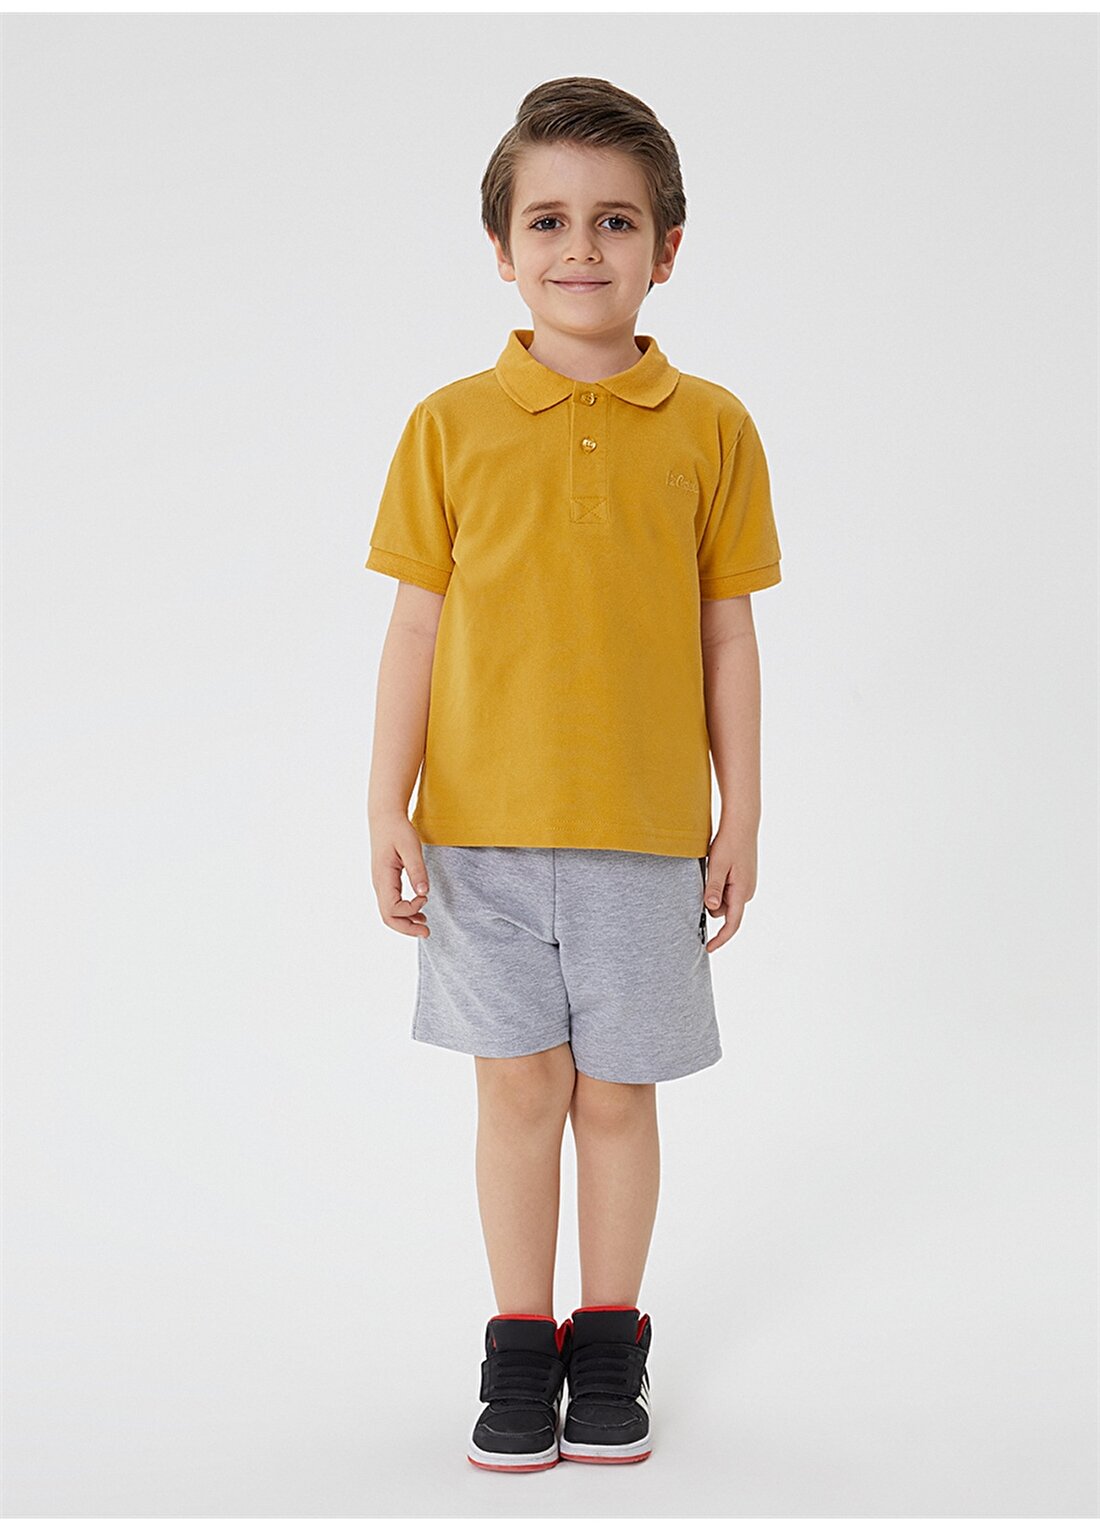 Lee Cooper Pike Hardal Erkek Çocuk Polo T-Shirt 212 LCB 242004 TWINS HARDAL